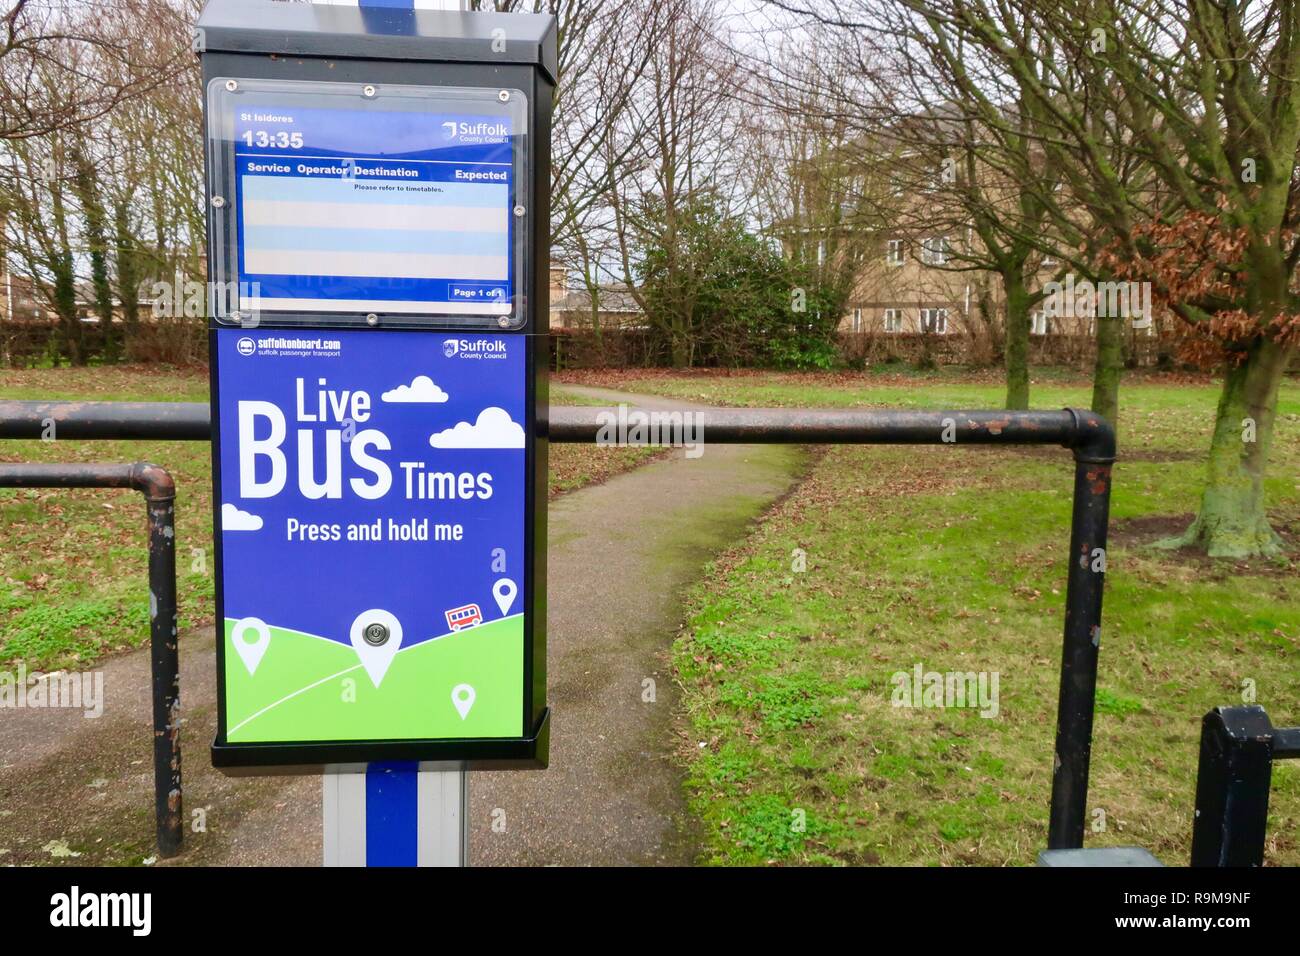 Live bus times - hi tech public transport in Suffolk, UK. December 2018. Stock Photo